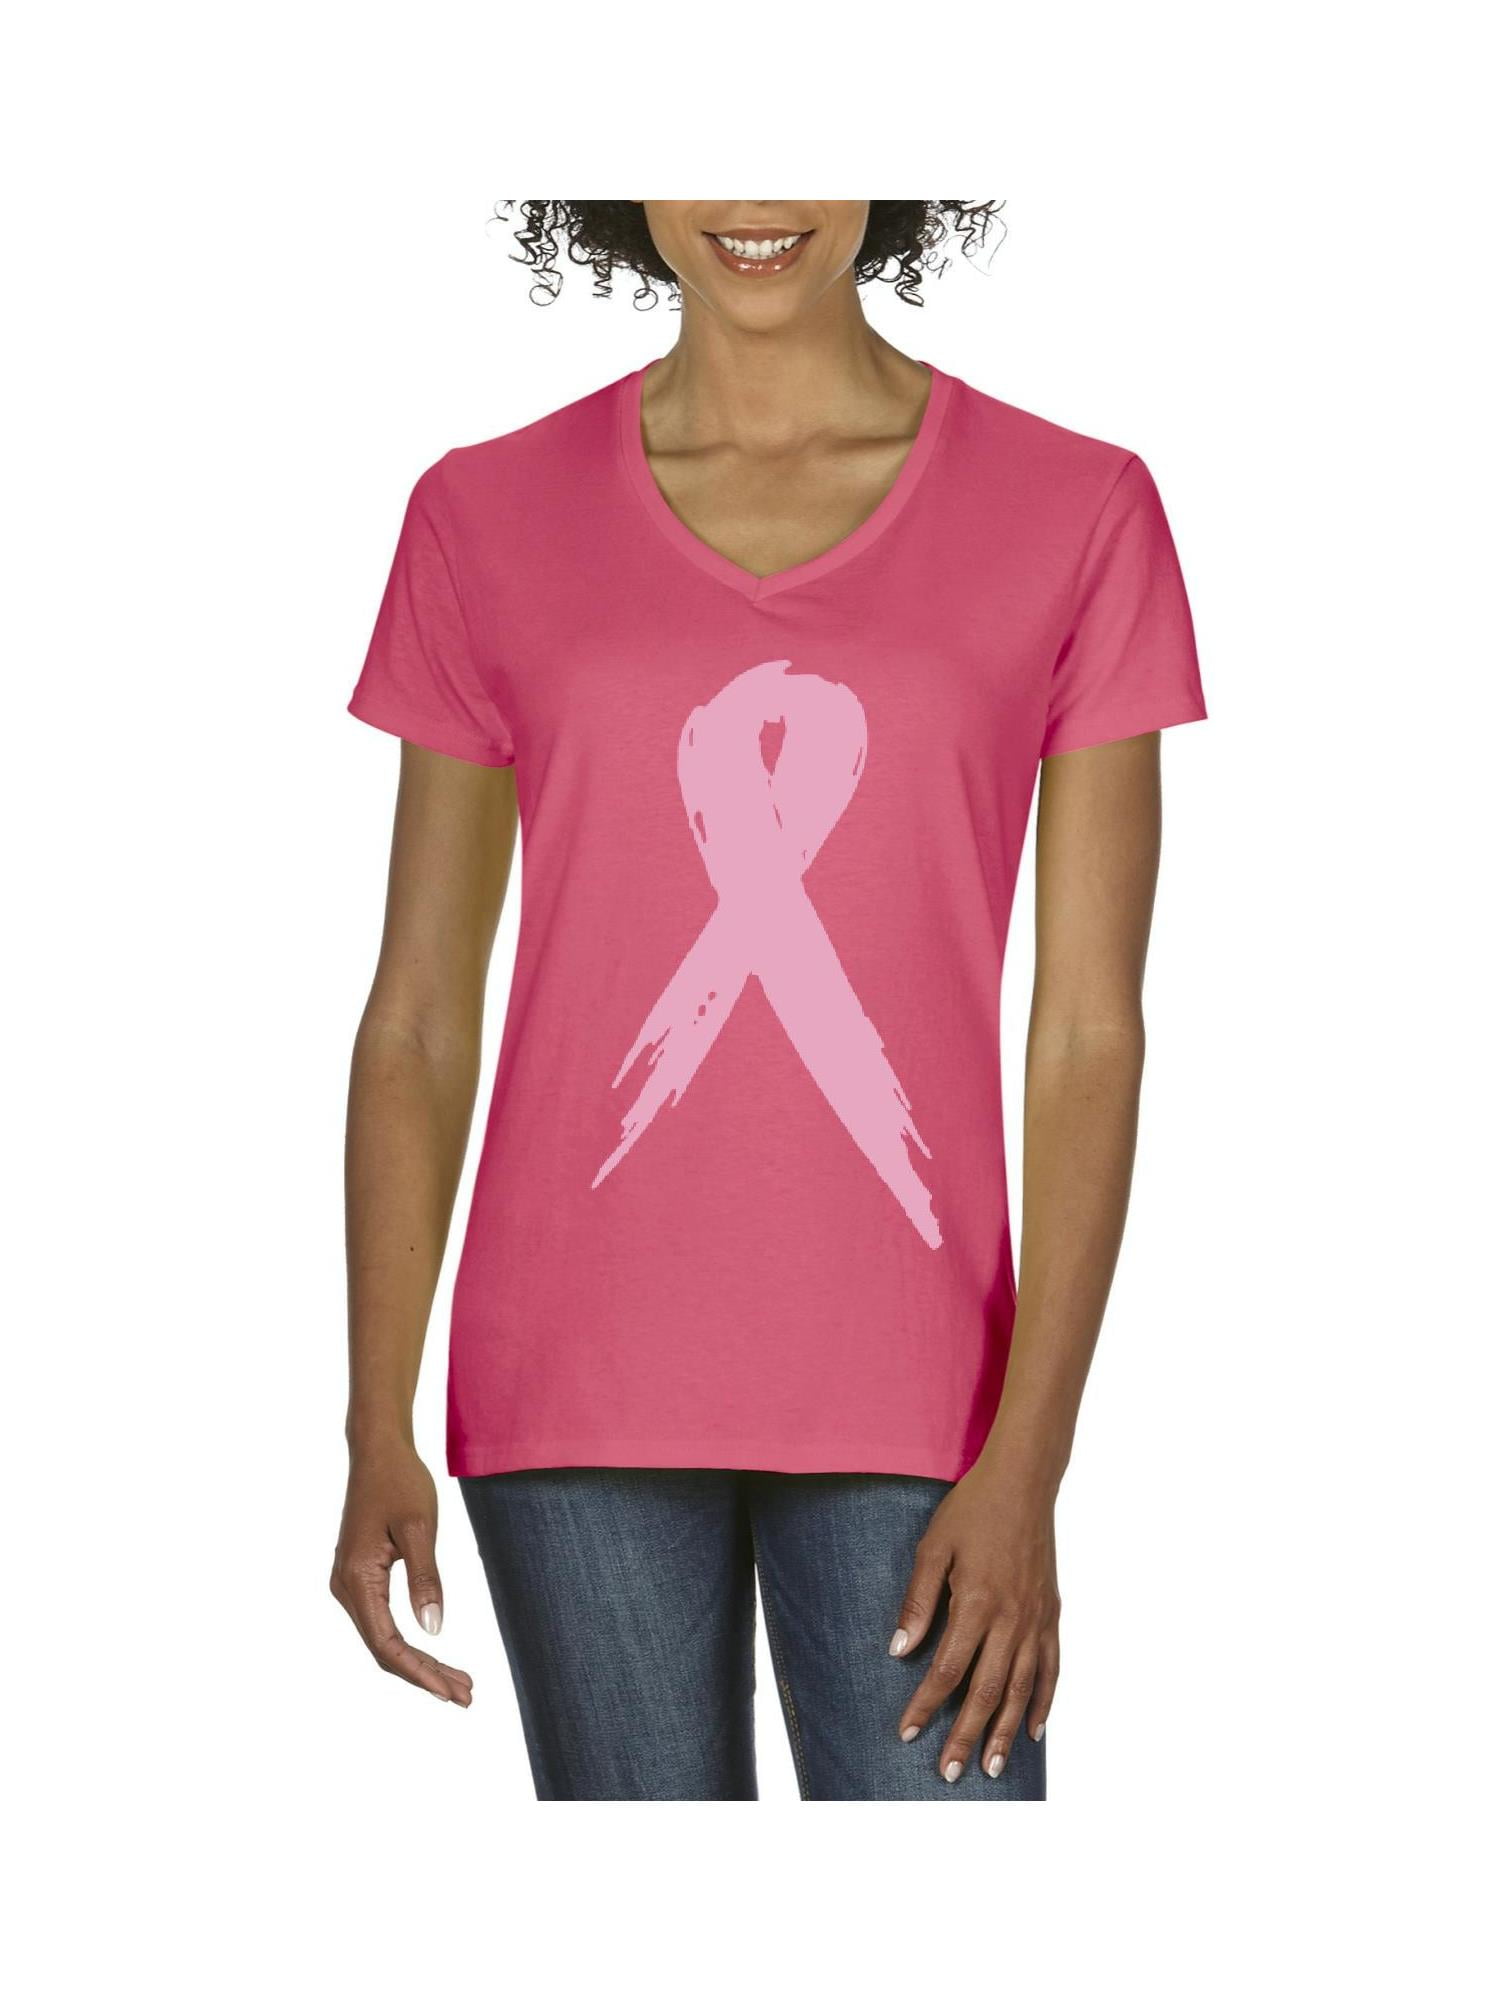 IWPF - Womens Pink Ribbon V-Neck T-Shirt - Walmart.com - Walmart.com